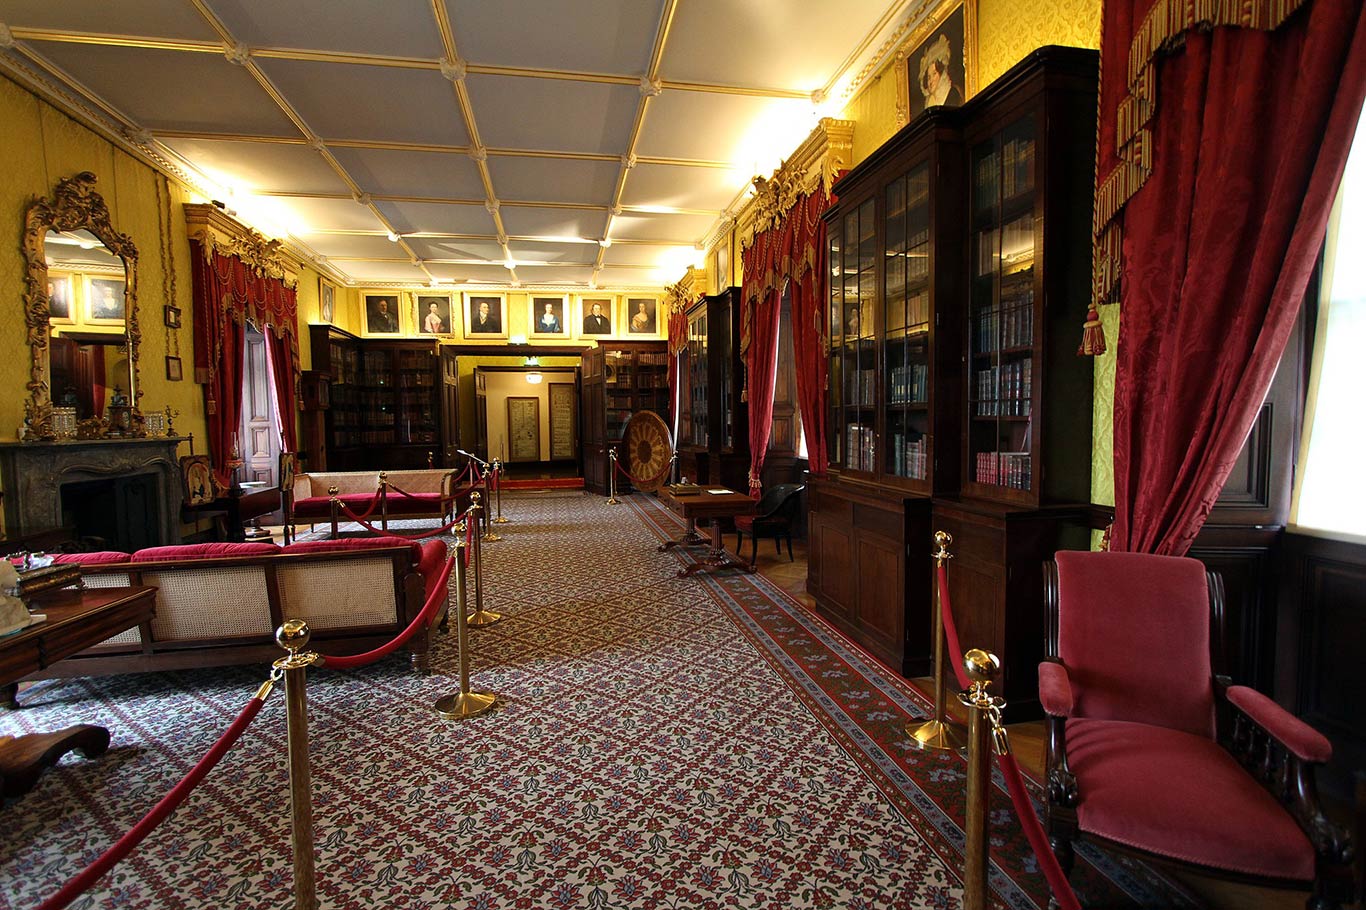 Kilkenny Castle interior